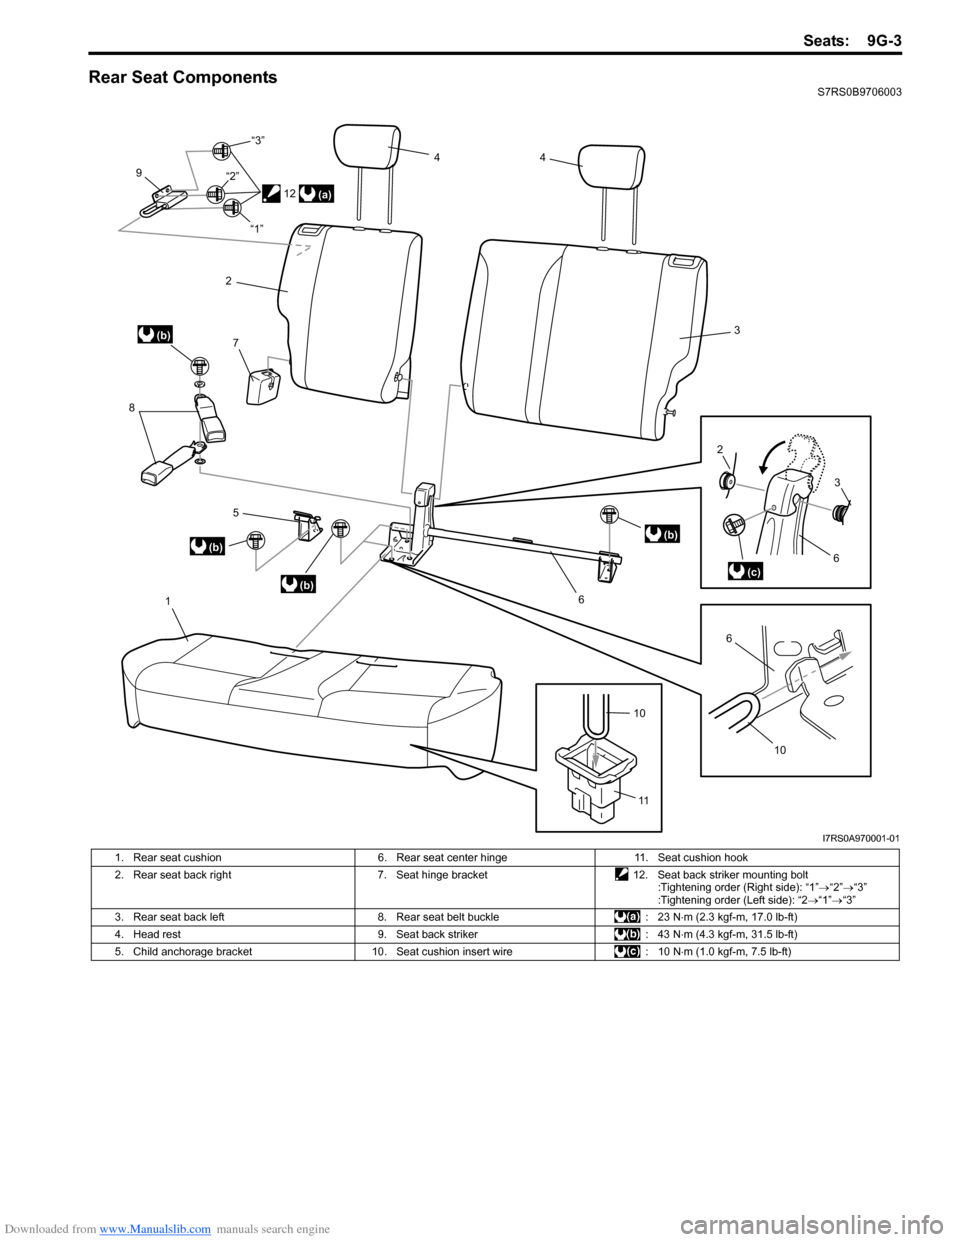 SUZUKI SWIFT 2008 2.G Service Workshop Manual Downloaded from www.Manualslib.com manuals search engine Seats: 9G-3
Rear Seat ComponentsS7RS0B9706003
1
5
(b)
(b)
(b)
8
7
9
2
4
4
3
(b)
6
6(c)
2
3
10
6
(a)
10
11
12
“1”
“2”
“3”
I7RS0A9700